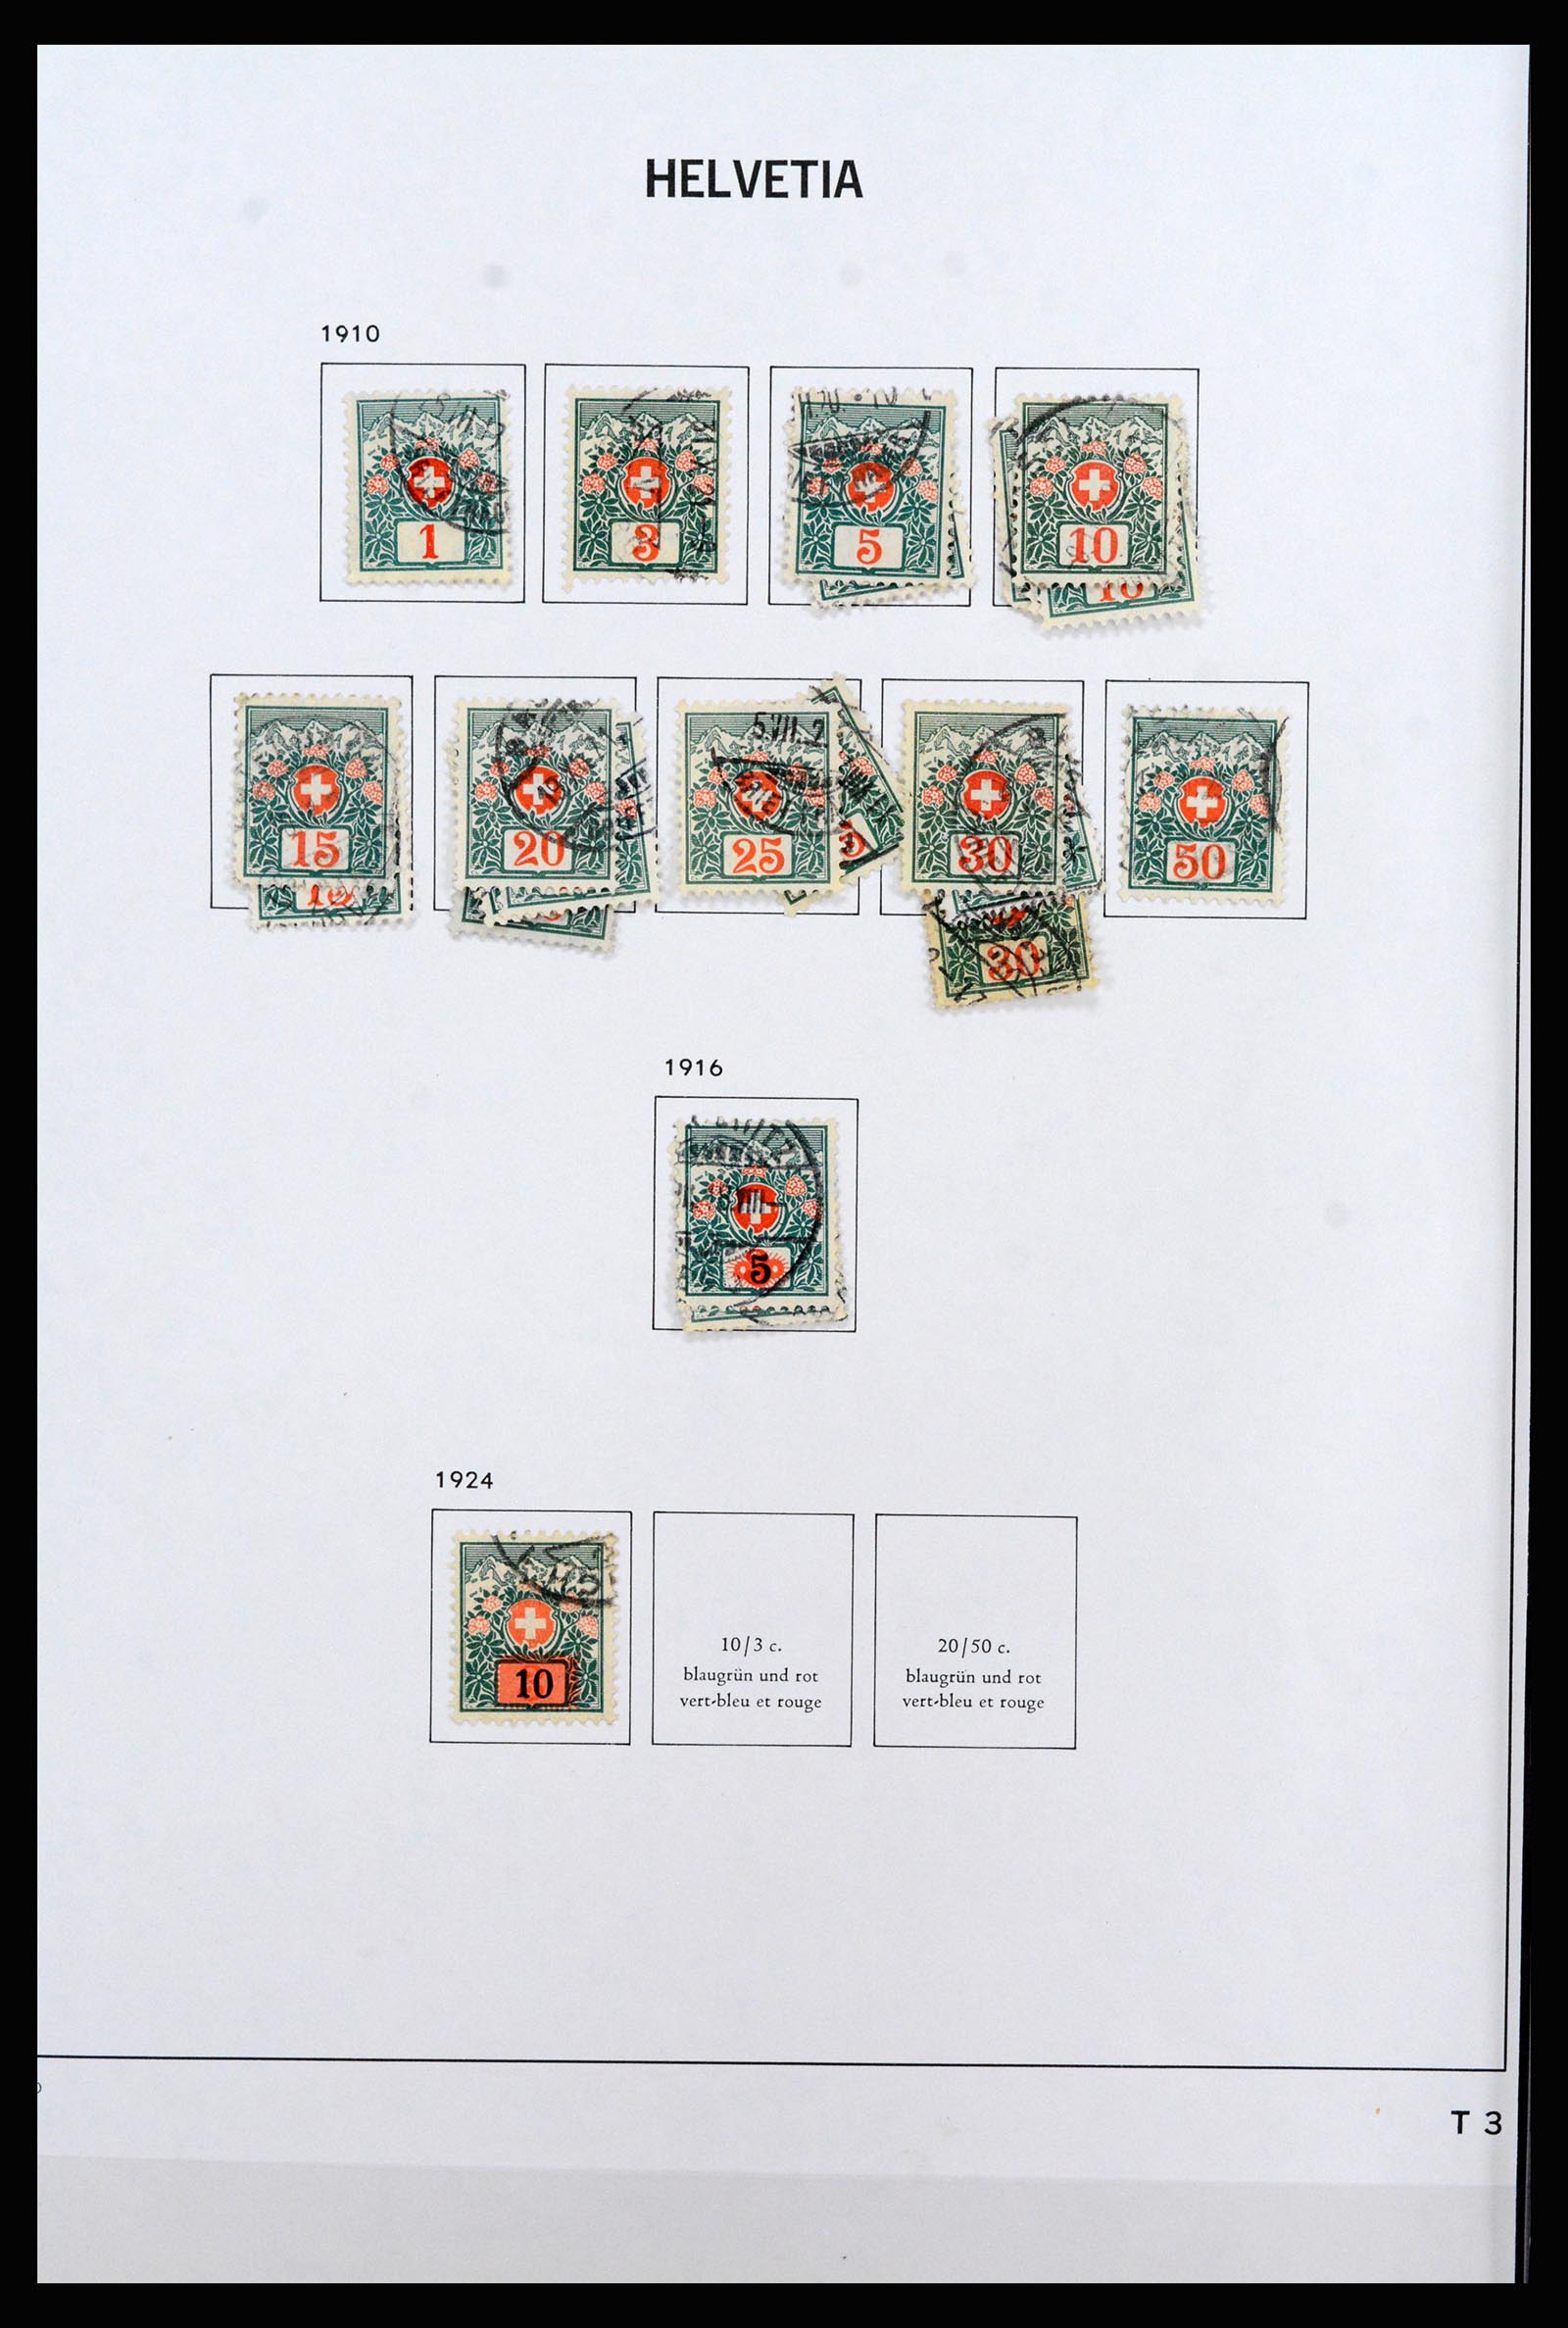 37225 204 - Stamp collection 37225 Switzerland 1854-2020.